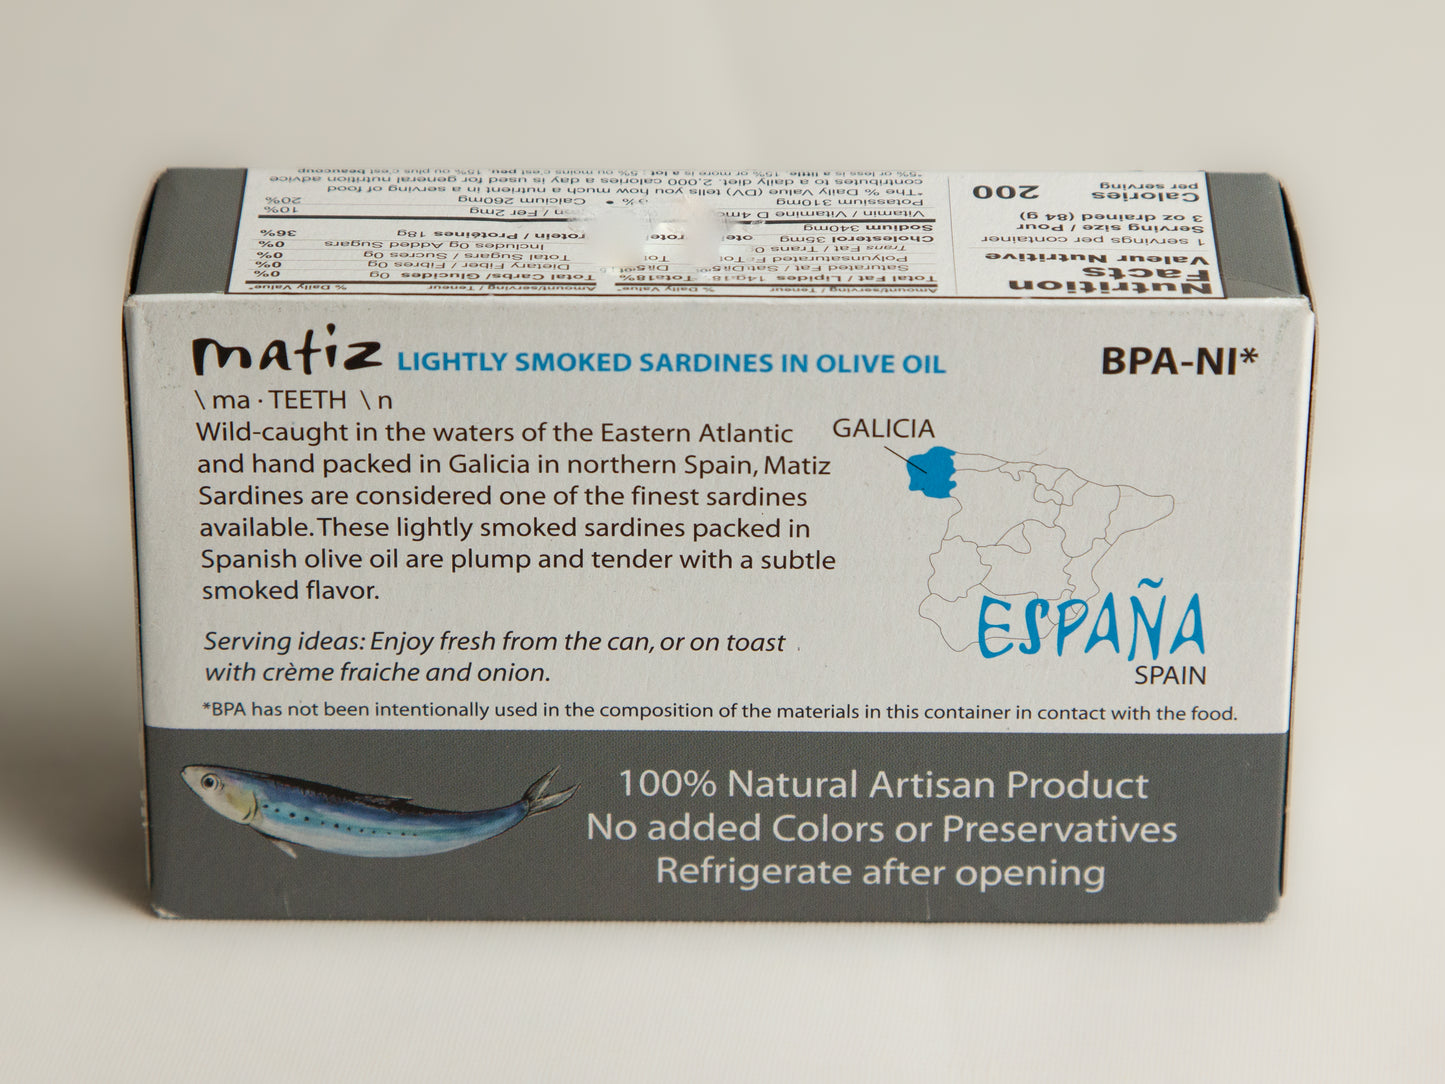 Box of Matiz Lightly Smoked Sardines Description